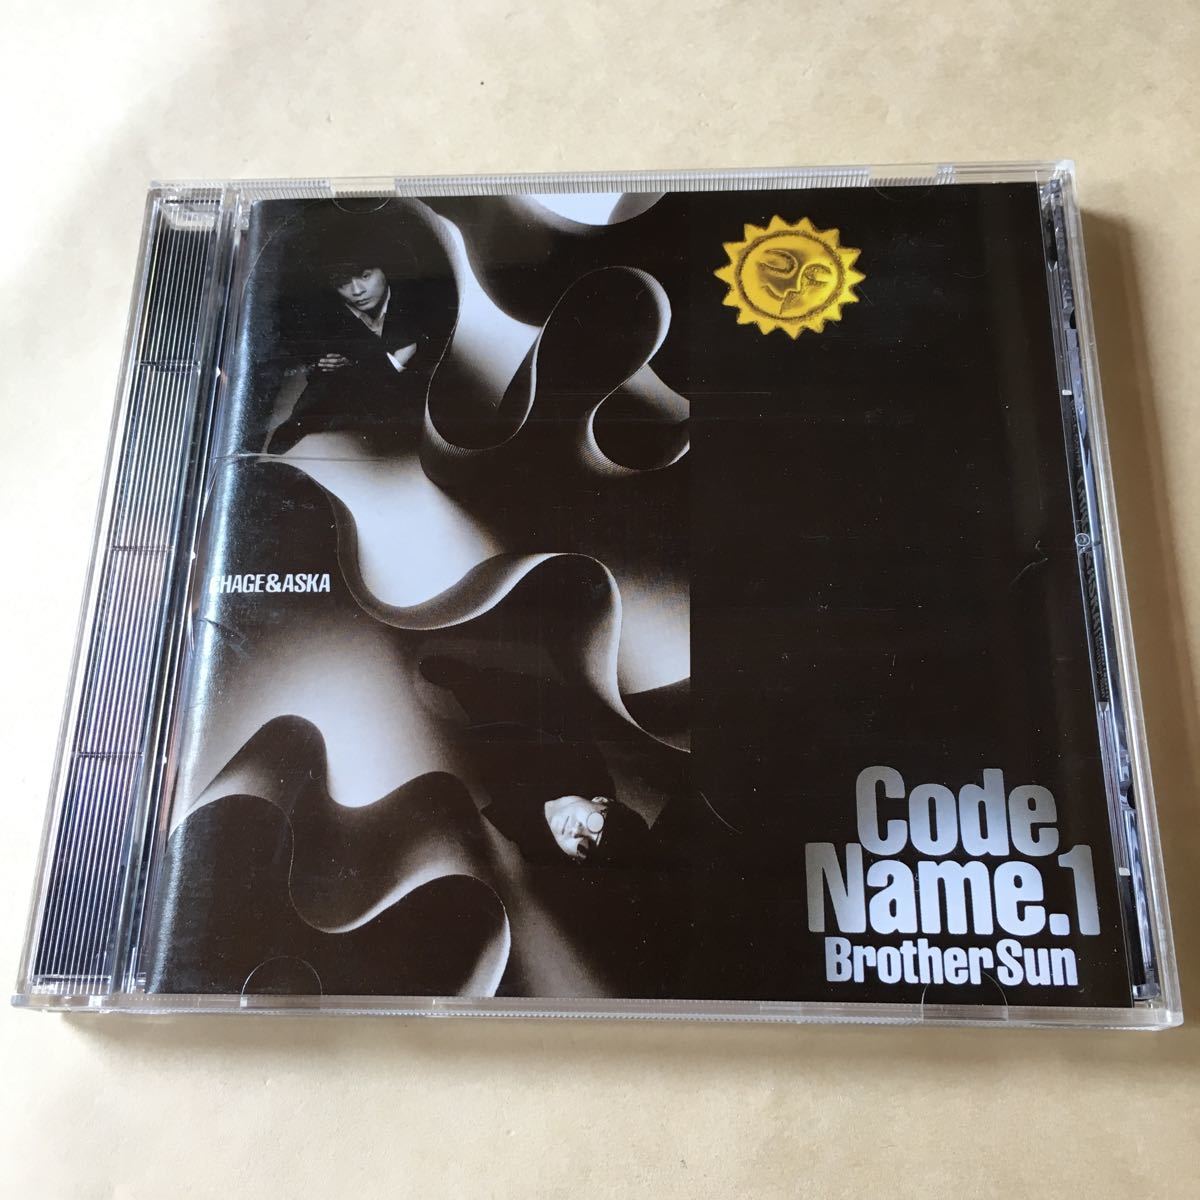 CHAGE&ASKA 1CD「Code Name.1 Brother Sun」_画像3